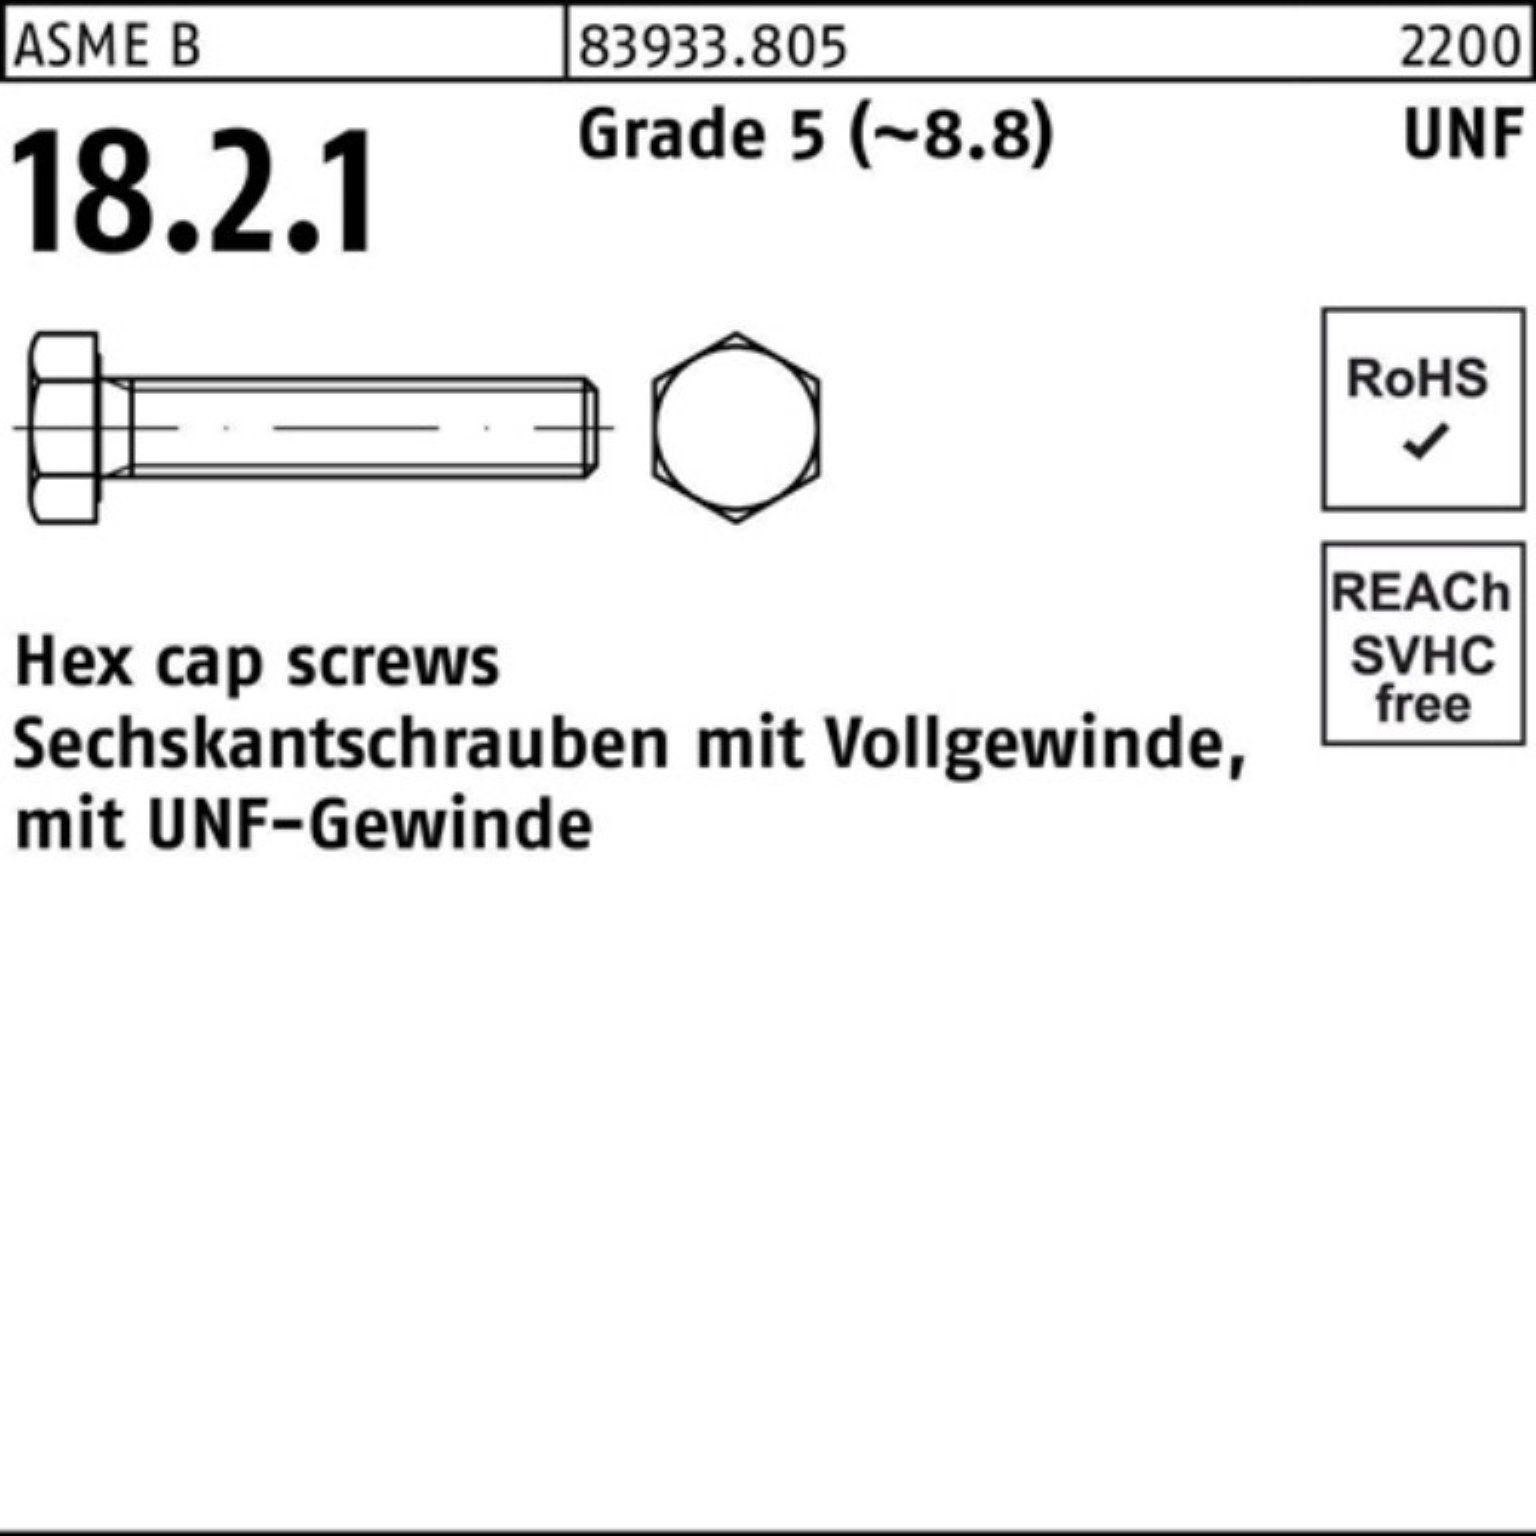 Reyher Sechskantschraube 100er Pack Sechskantschraube R 83933 UNF-Gewinde VG 1/2x 1 3/4 Grade 5